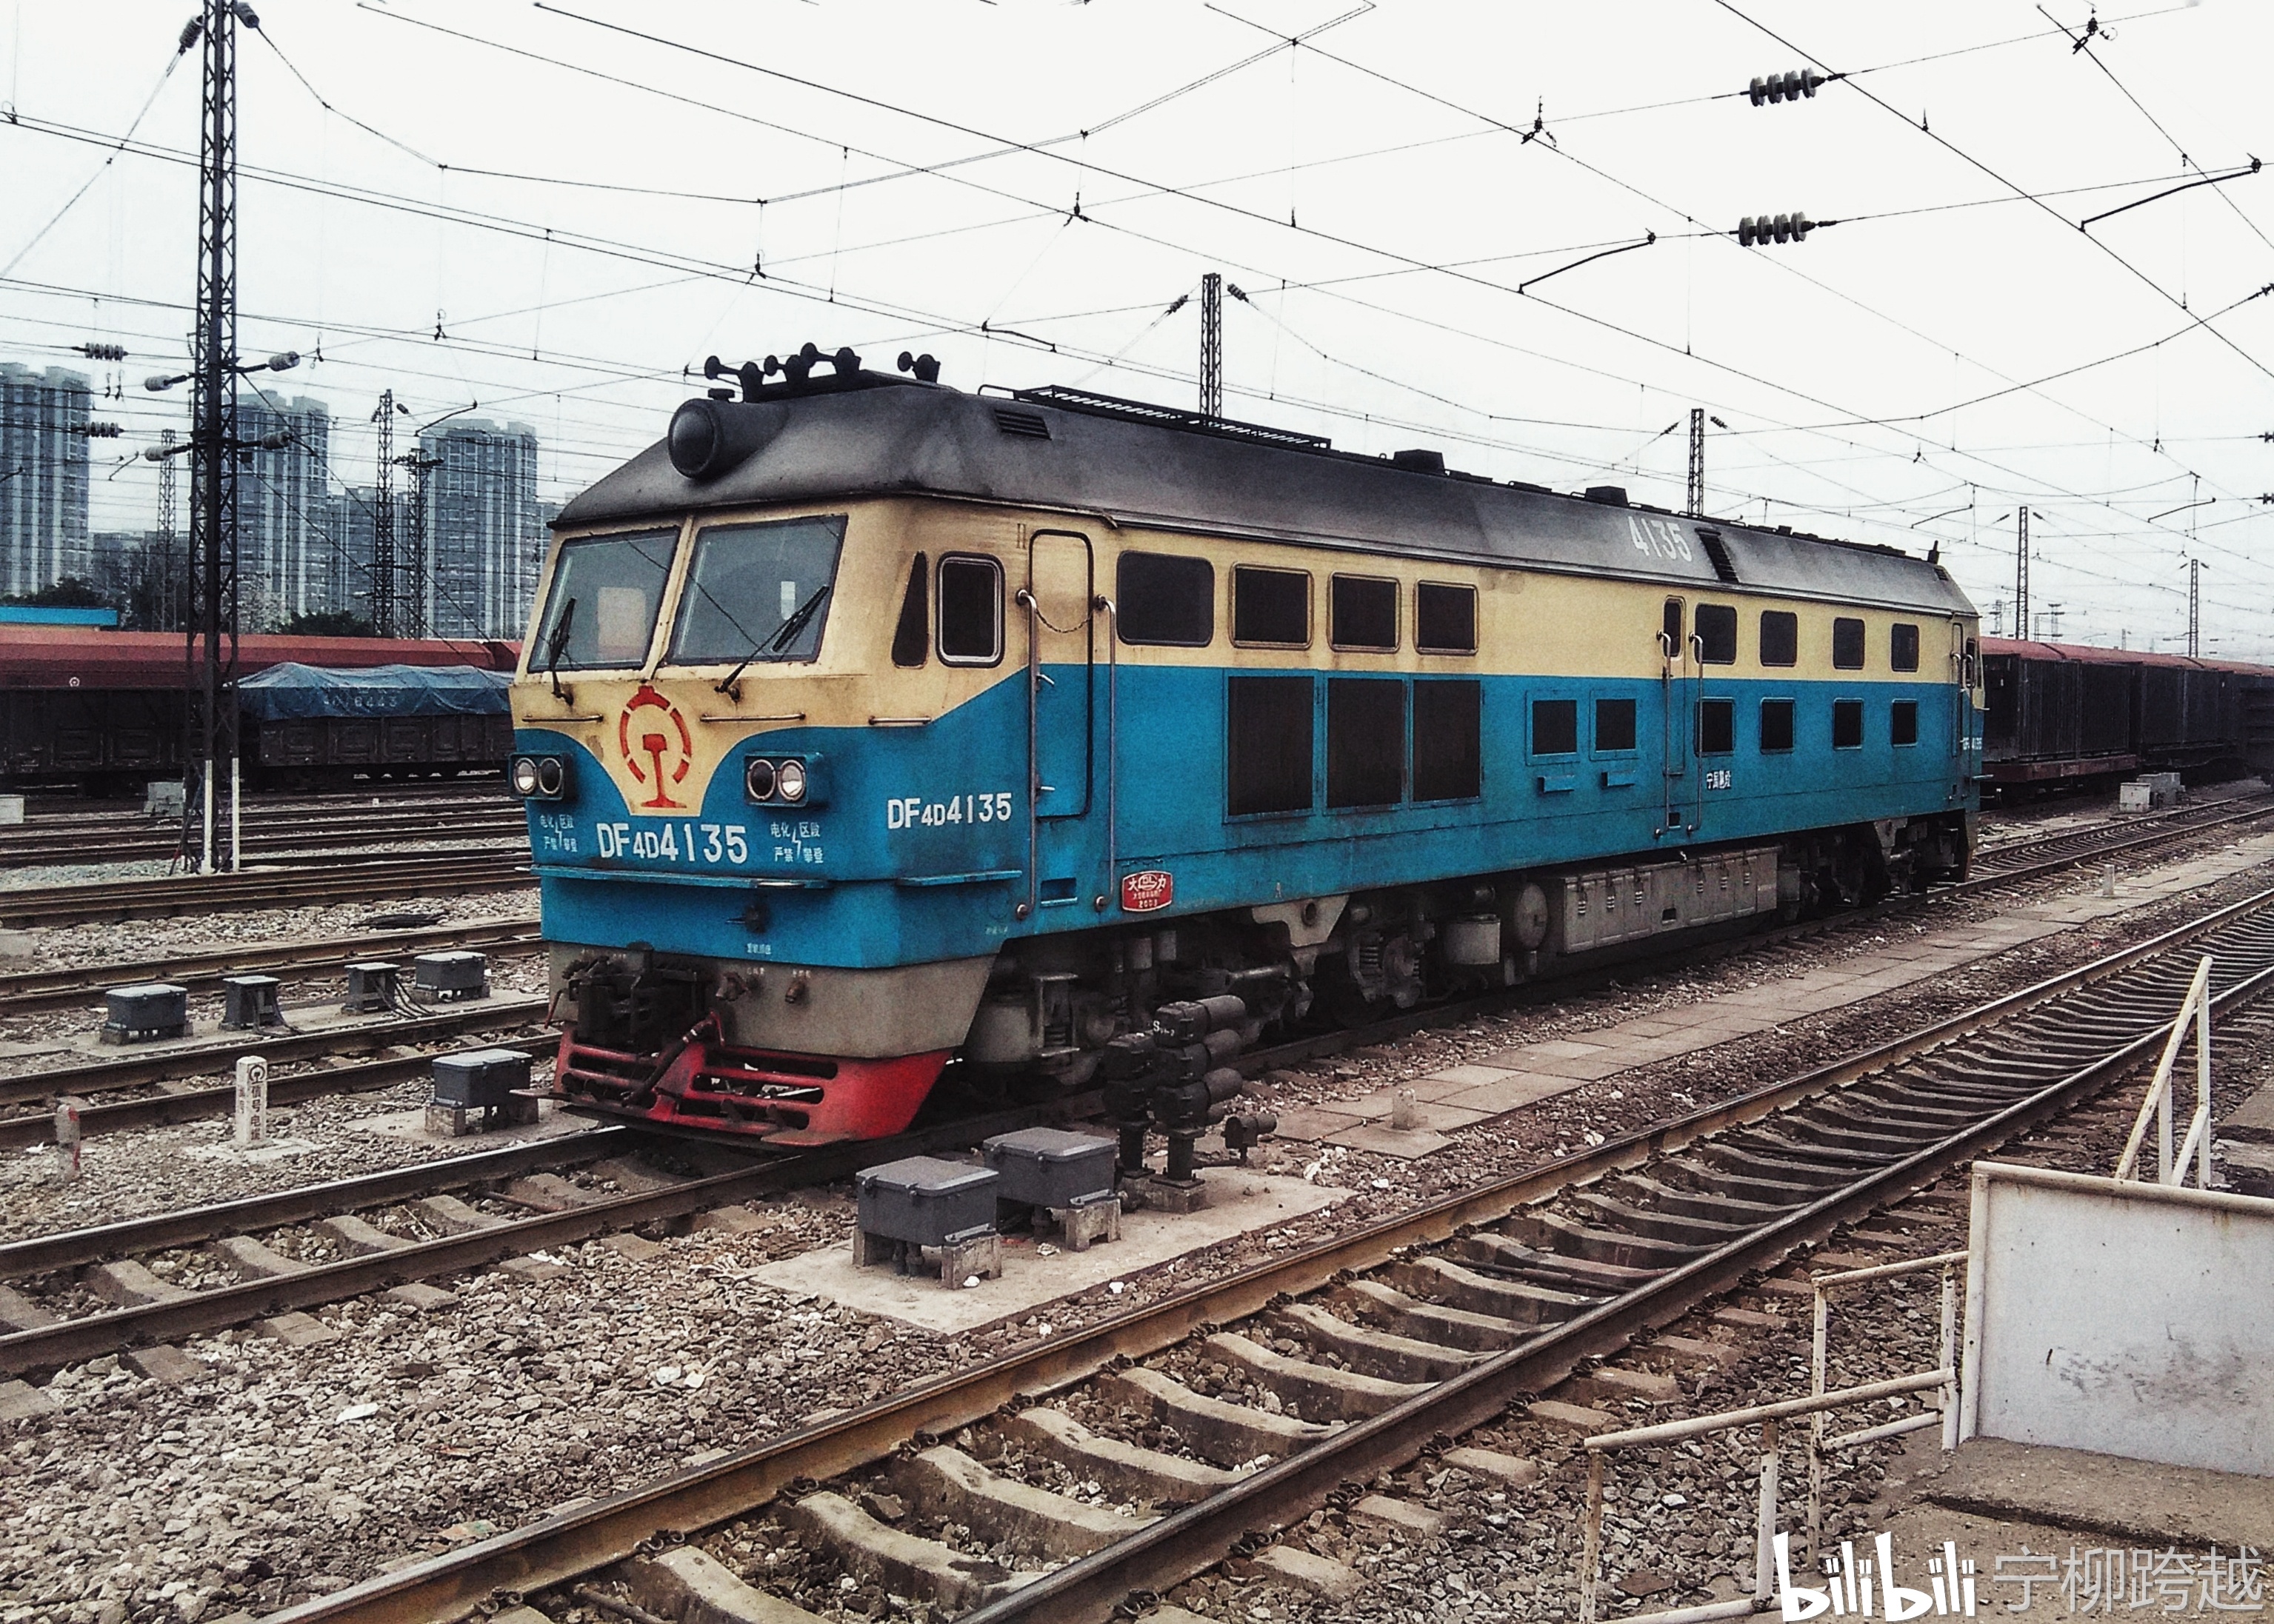 df4d-4135号机车,拍摄于2016年3月5日